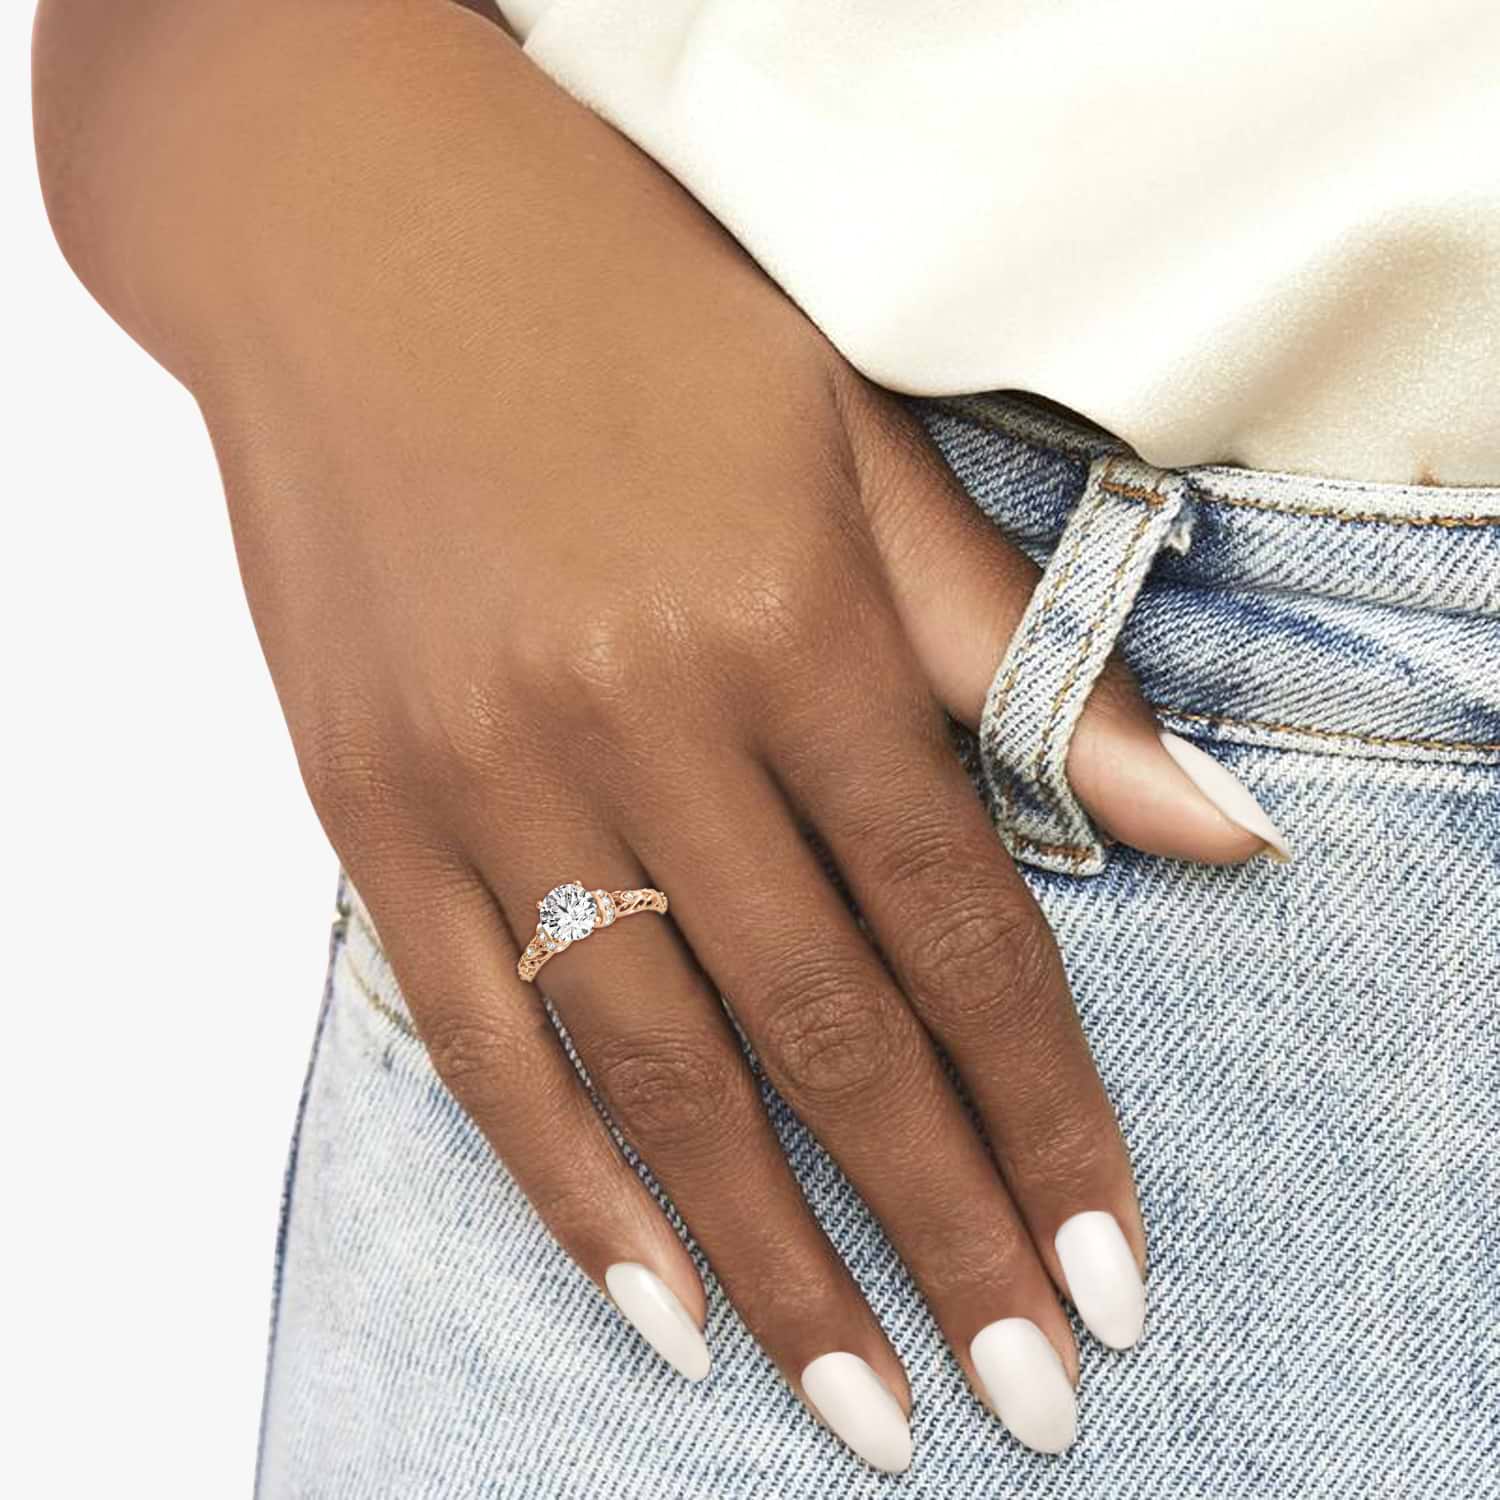 Diamond Antique Style Engagement Ring Setting 18k Rose Gold (0.12ct)